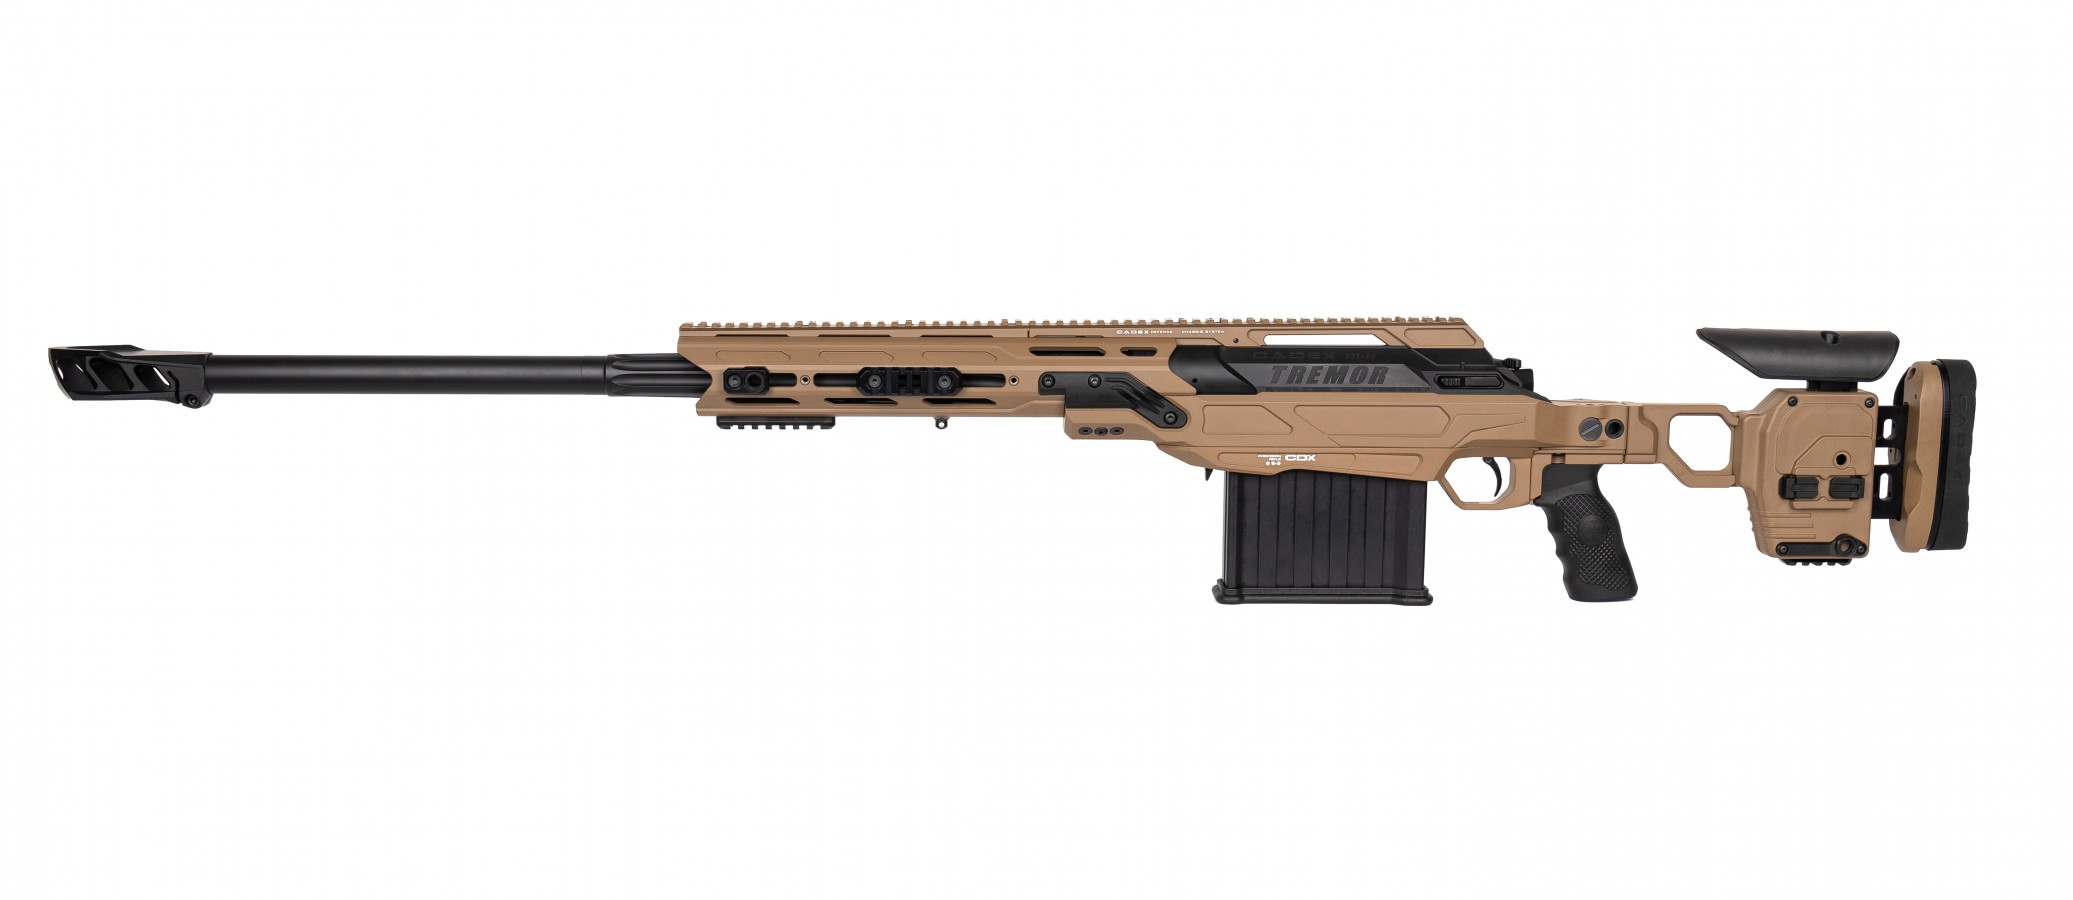 TFB Review: Cadex CDX-50 TremorThe Firearm Blog